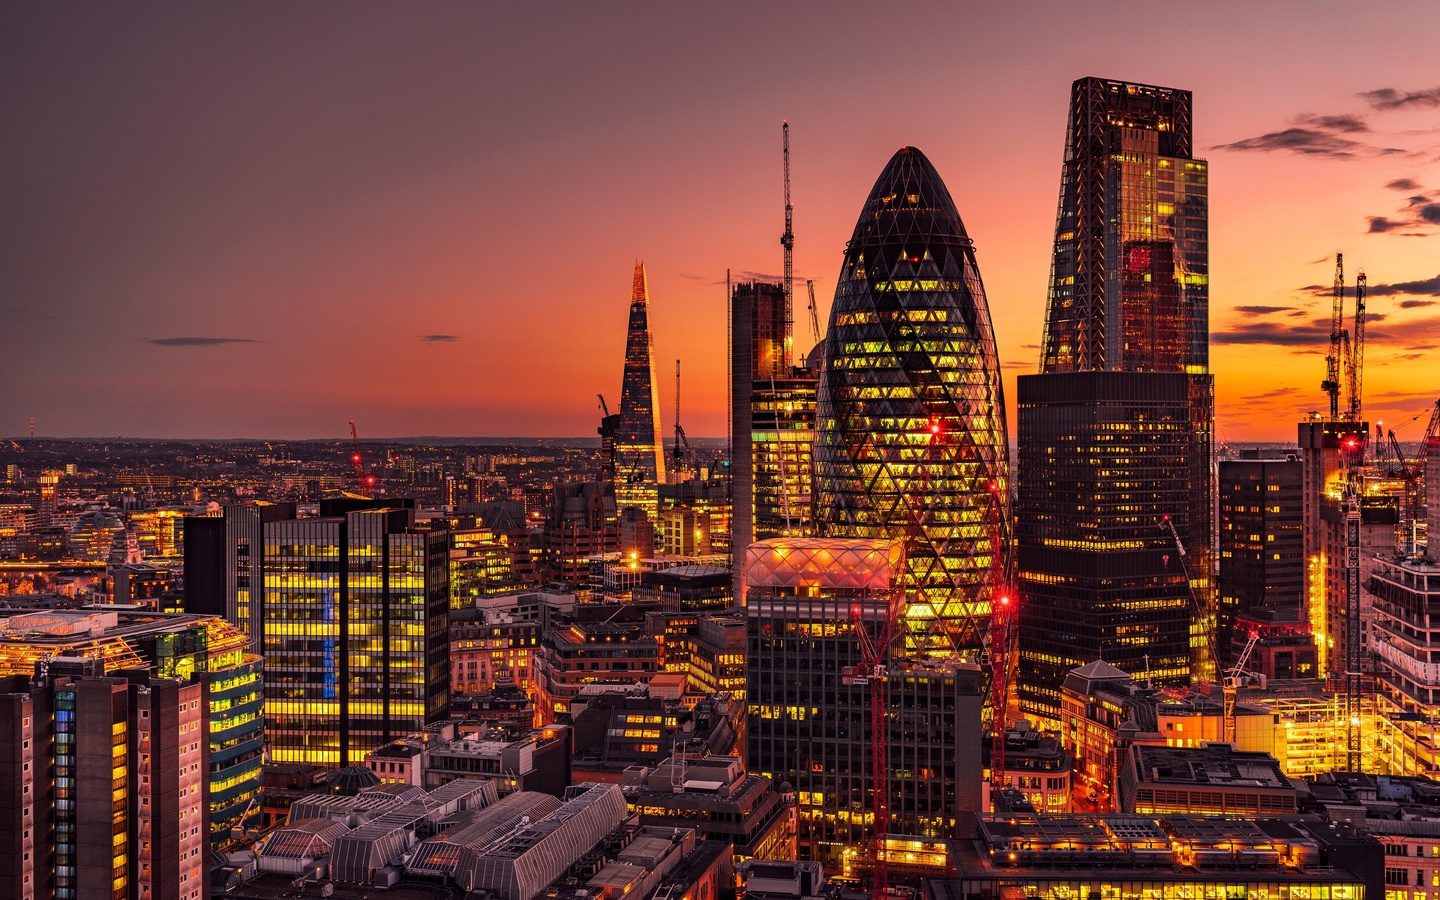 london, sunset, skyline, scenic, modern architecture